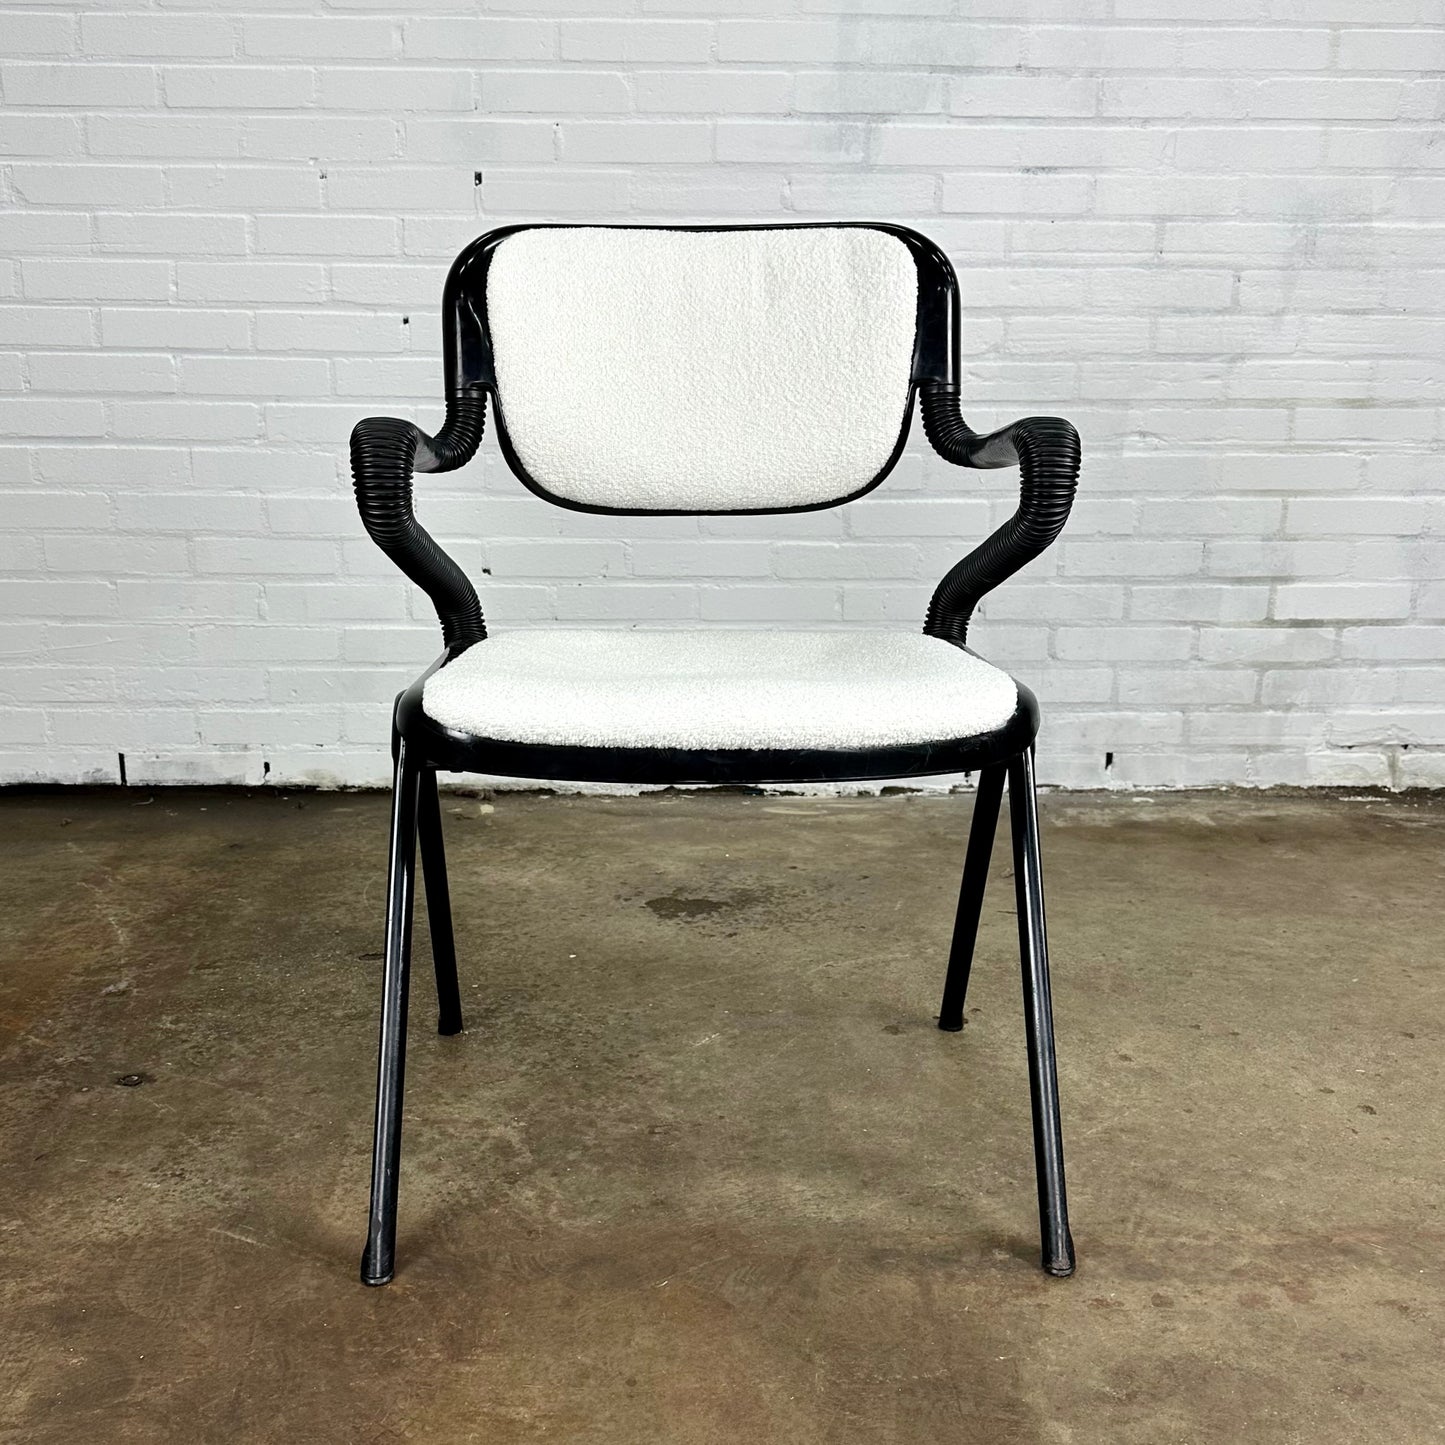 Vertebra chairs by Emilio Ambasz & Giancarlo Piretti (6 pieces available)